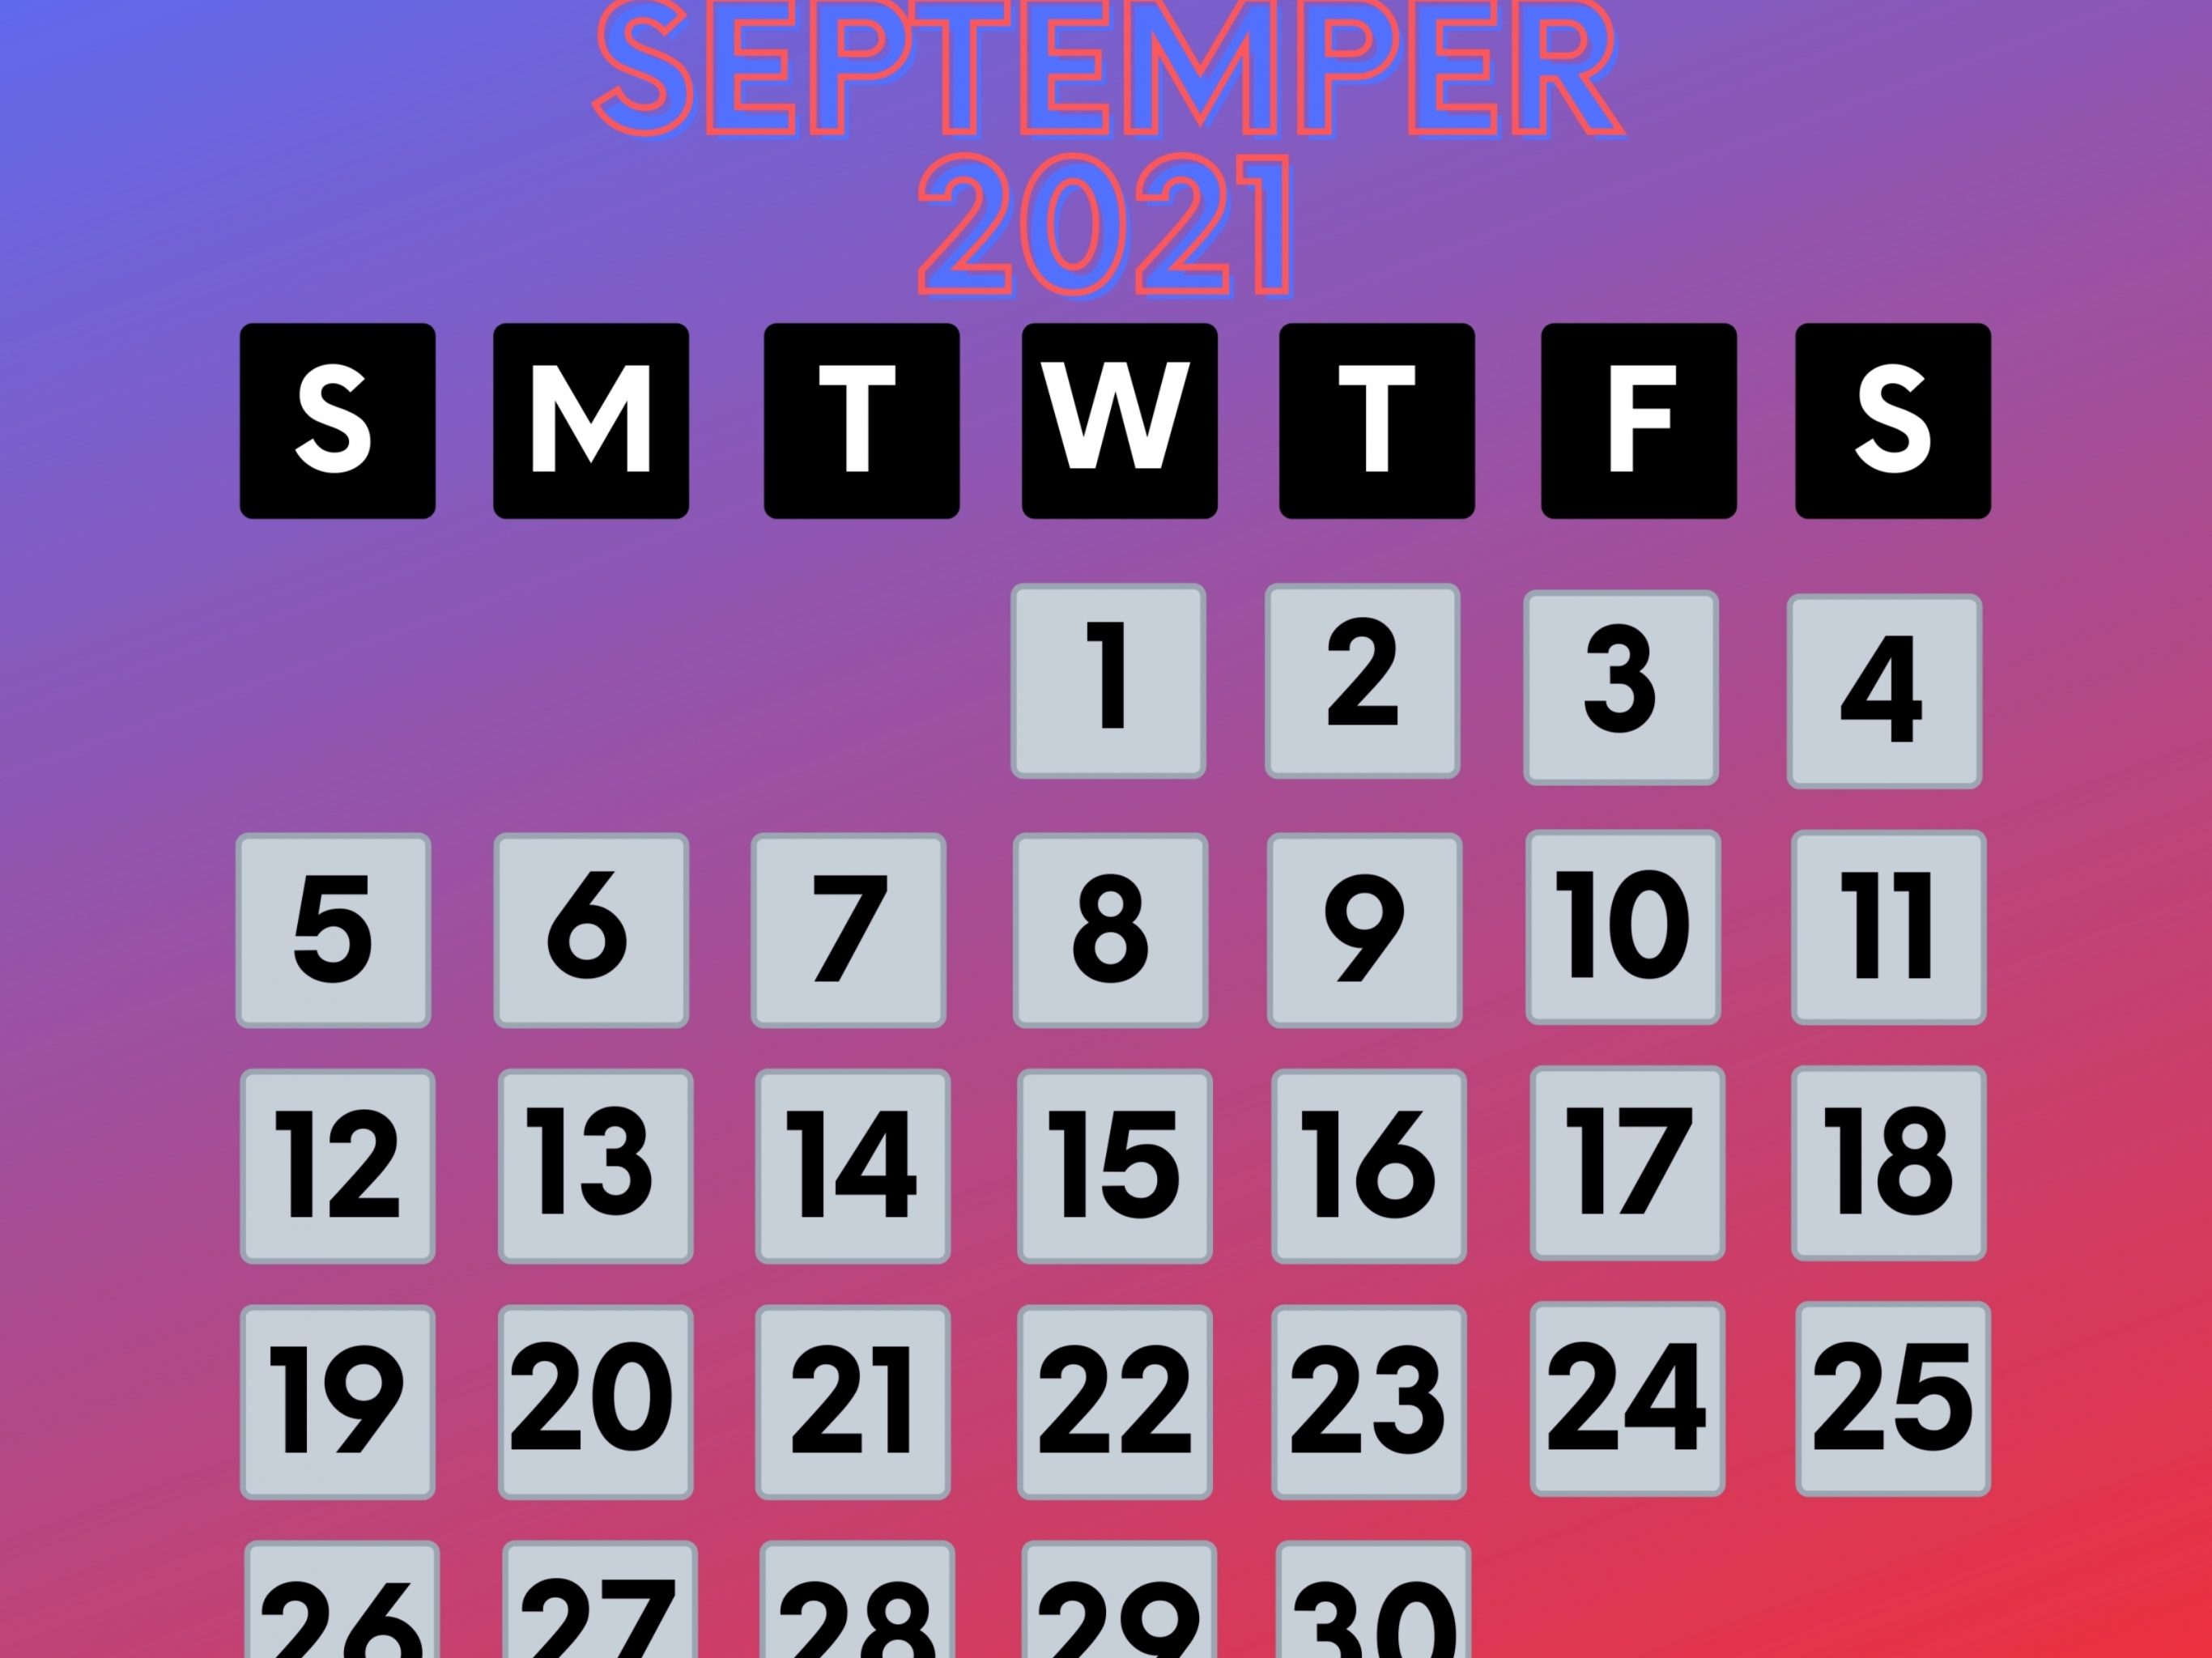 2732x2048 iPad air iPad Pro wallpapers September 2021 Calendar iPad Wallpaper 2732x2048 pixels resolution